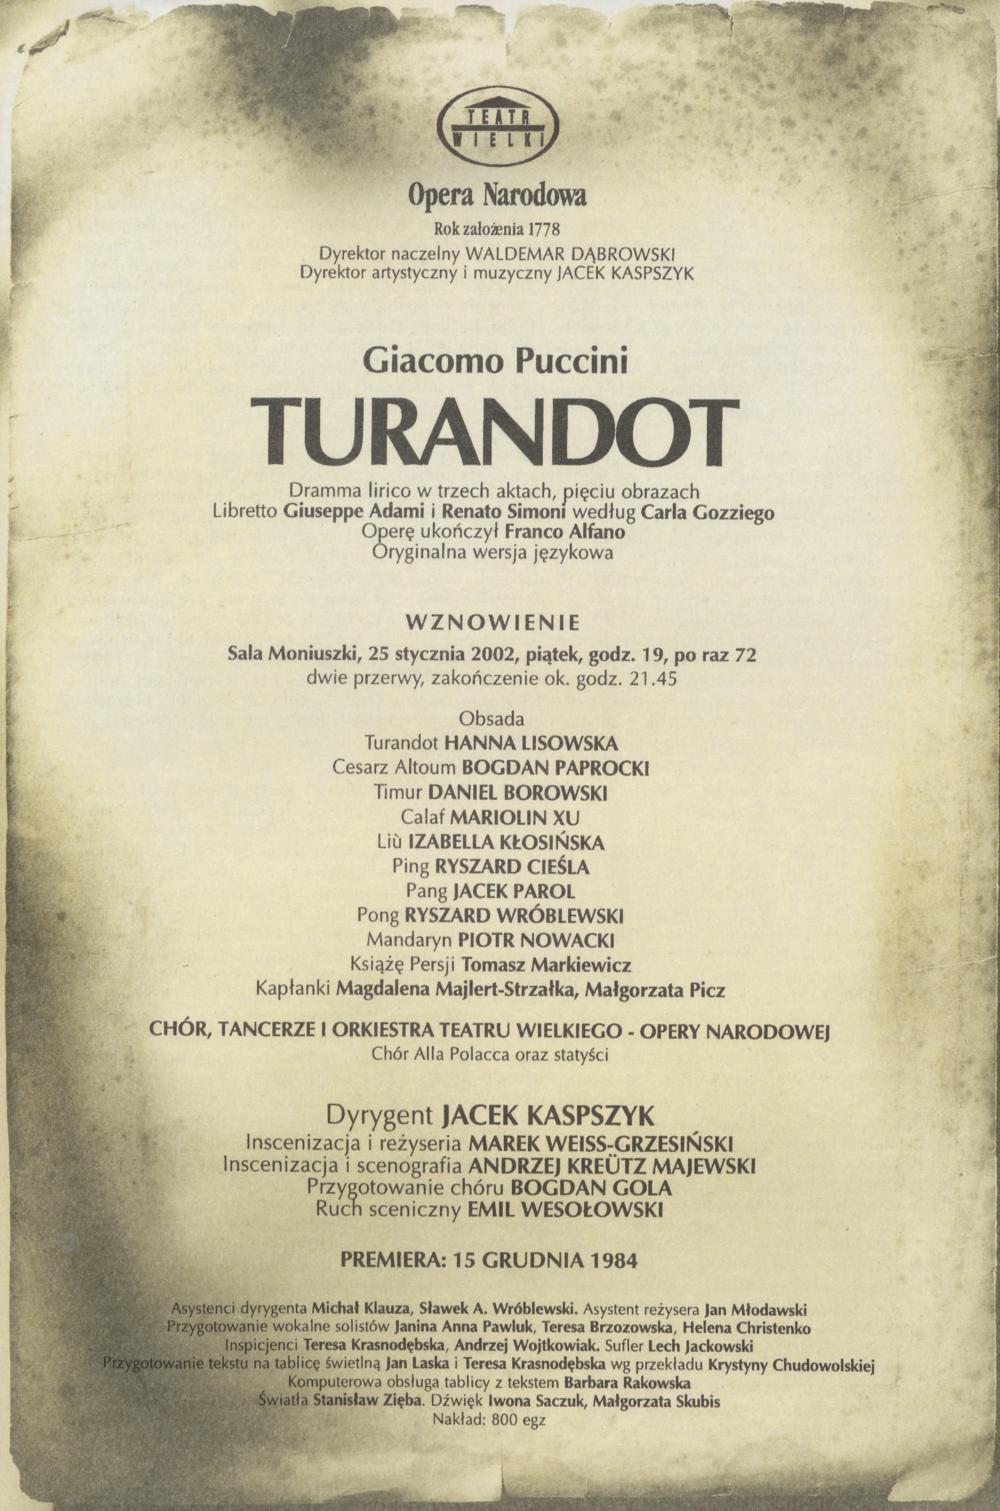 Wkładka obsadowa „Turandot” Giacomo Puccini 25-01-2002- Wznowienie